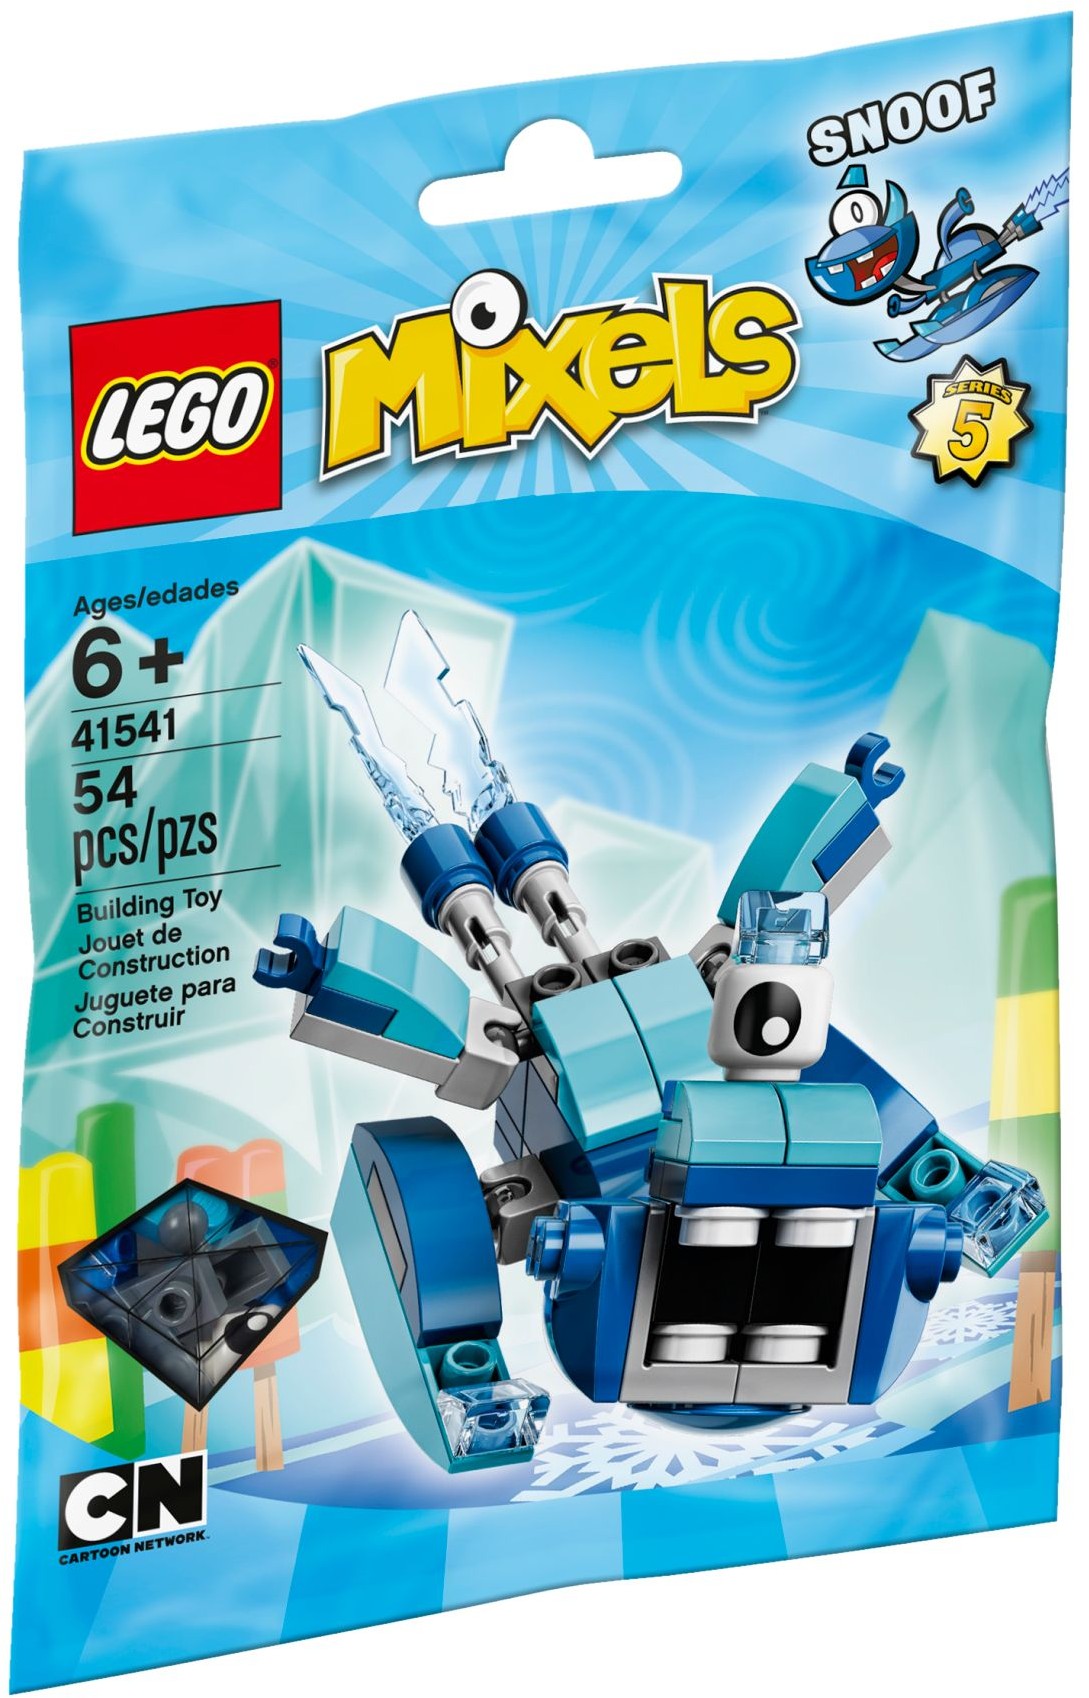 Lego Mixels Snoof 6+ ani